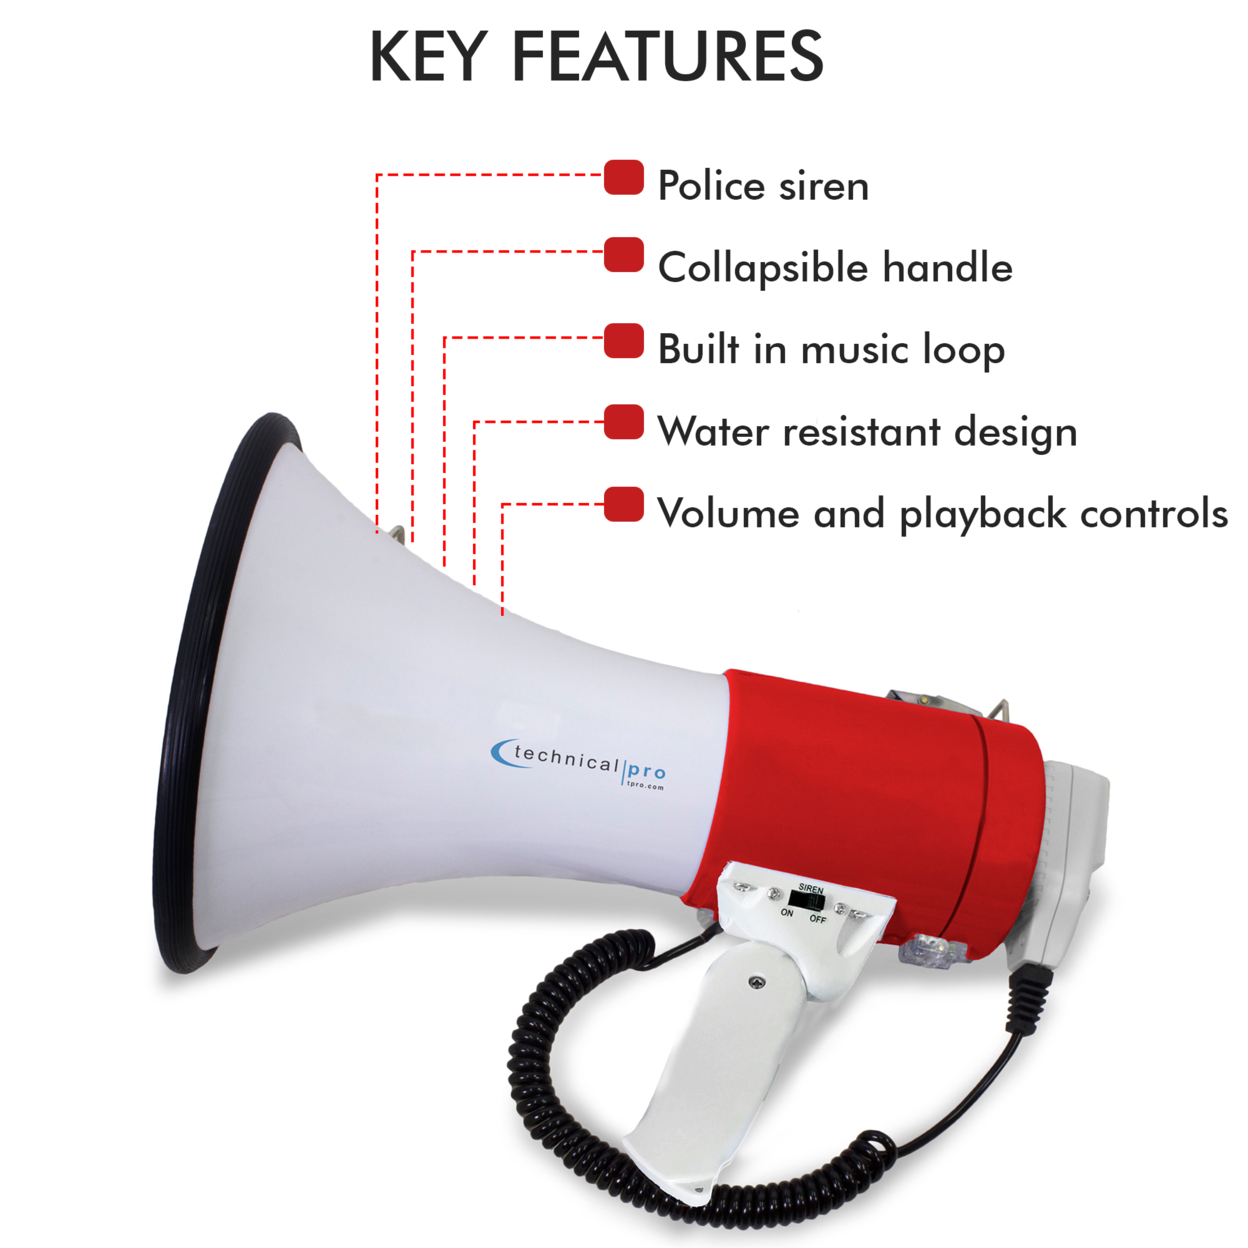 Technical Pro Red Megaphone 50-Watt Siren Bullhorn Speaker W/ Detachable Microphone - Professional Outdoor Voice For Police & Cheerleading